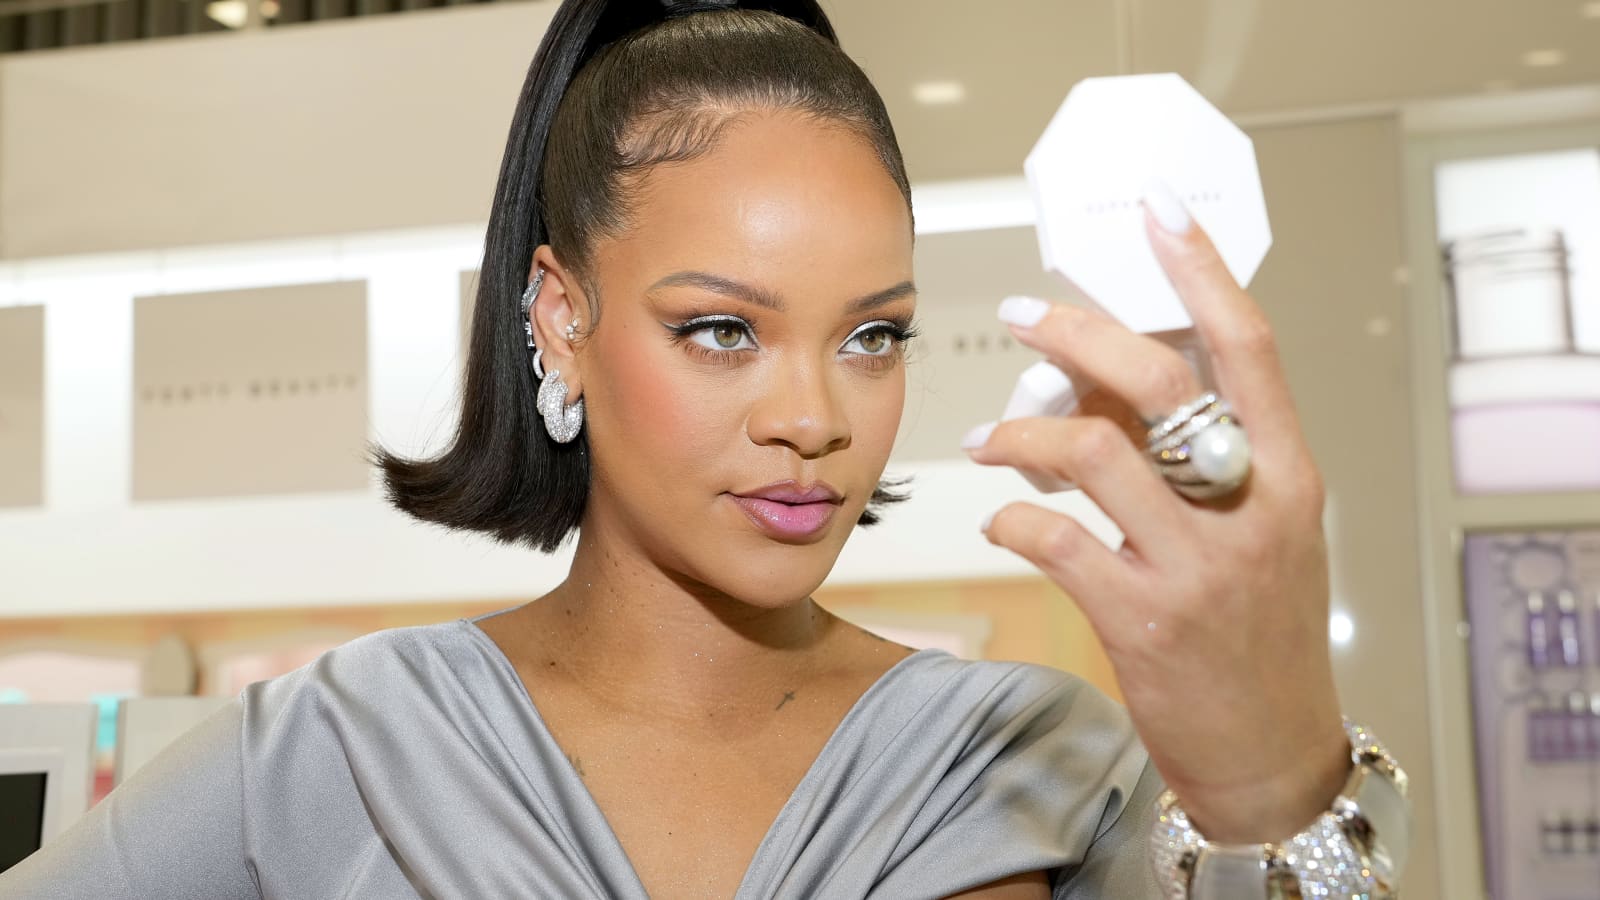 Rihanna: Photos of the singer, Fenty founder through the years